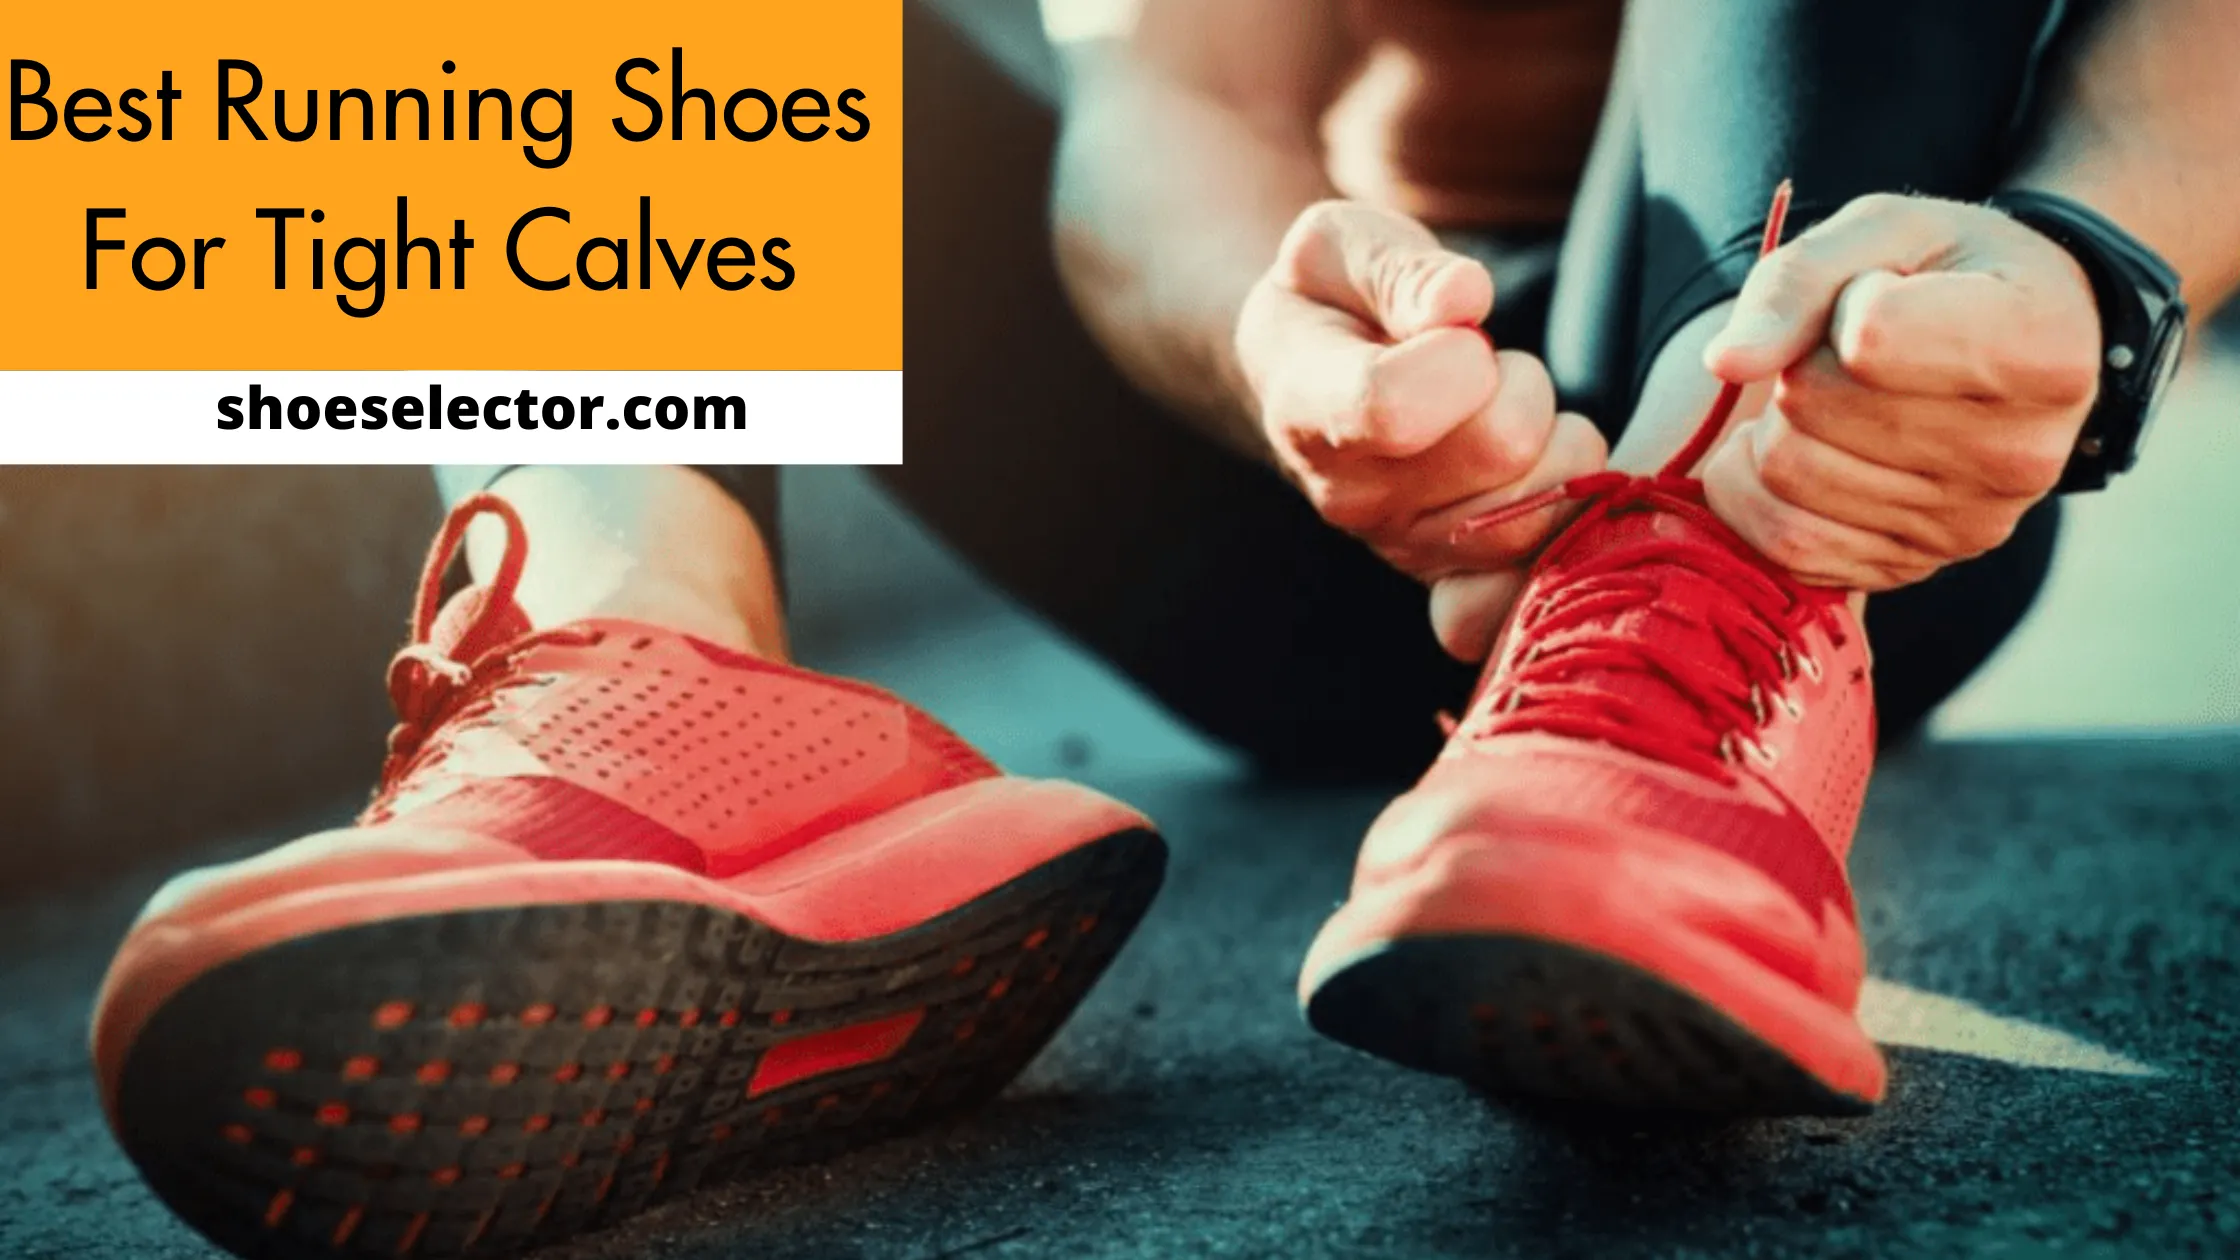 Best Running Shoes For Tight Calves - Expert Choice